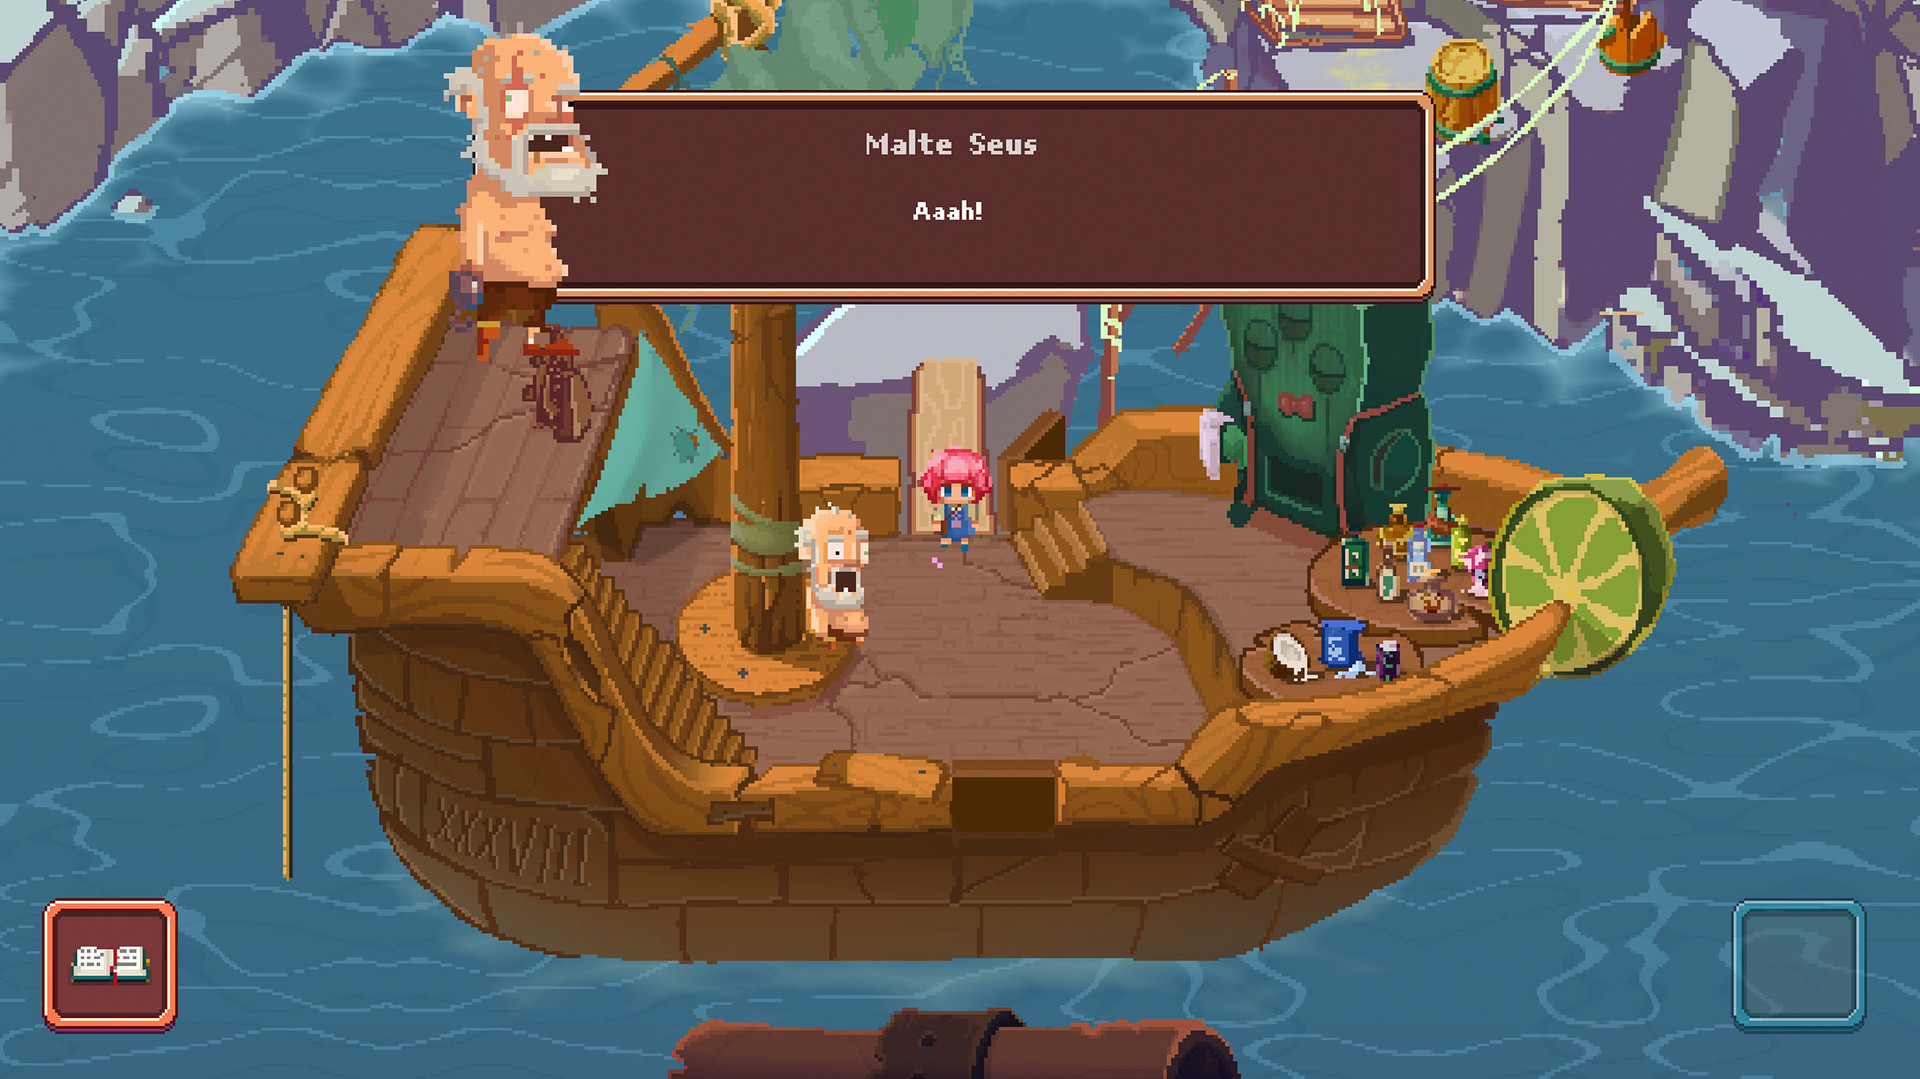 Screenshot Cleo a pirates tale - PLAZA + Update v1.1.5 PC Game free download torrent